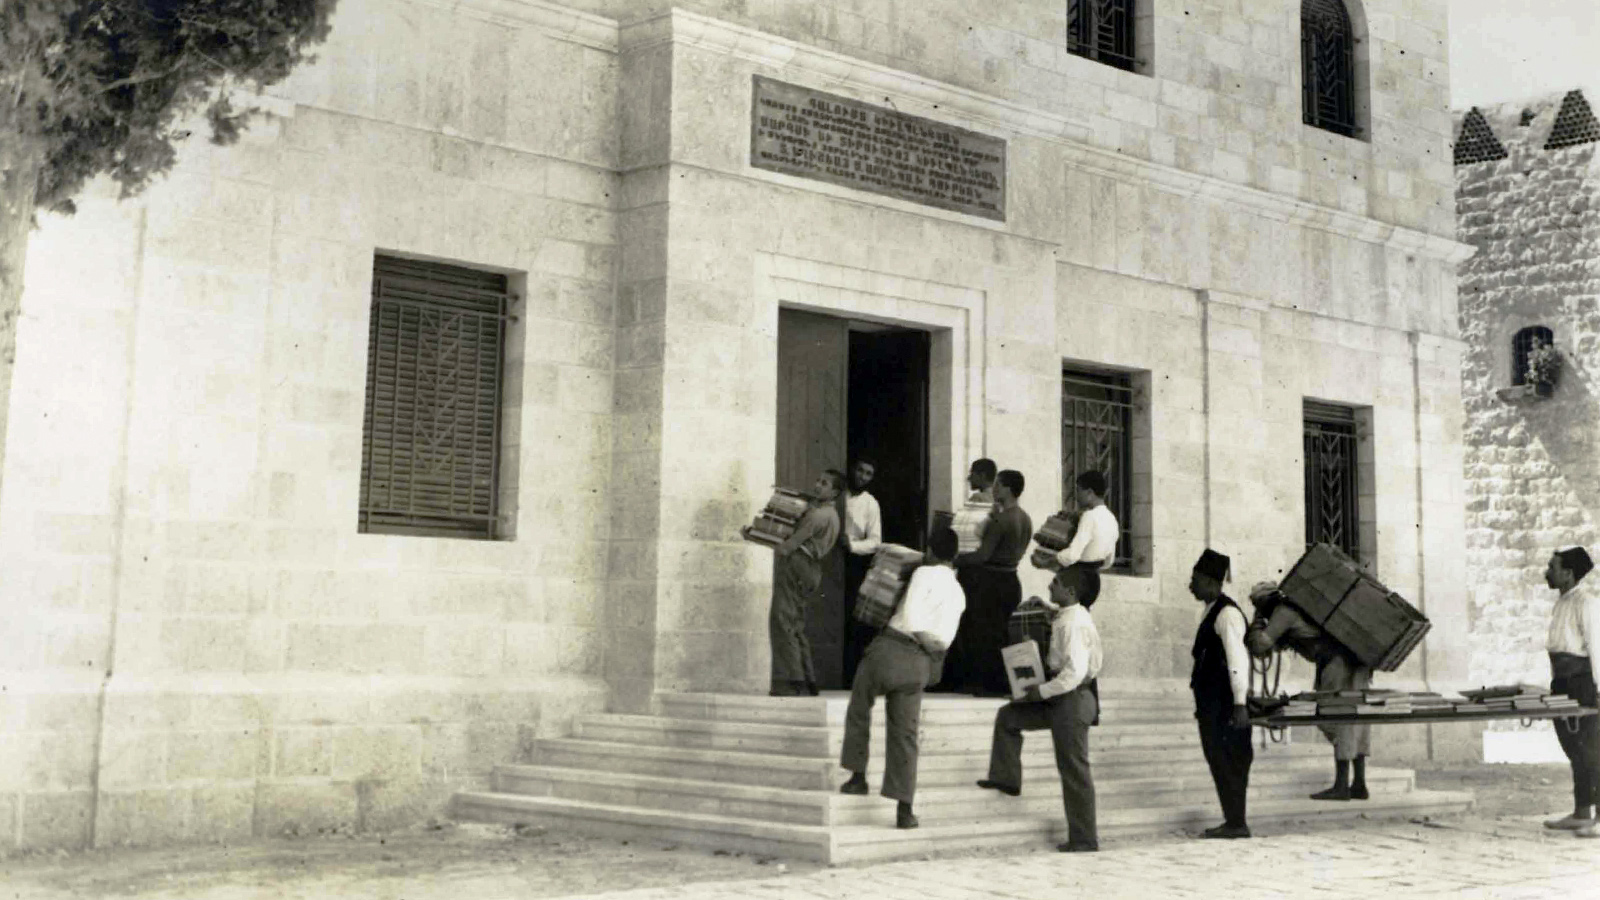 Transporting books into the Gulbenkian Library. Aram Hashadoor, Jerusalem, undated. Gulbenkian Archives F04-02692.